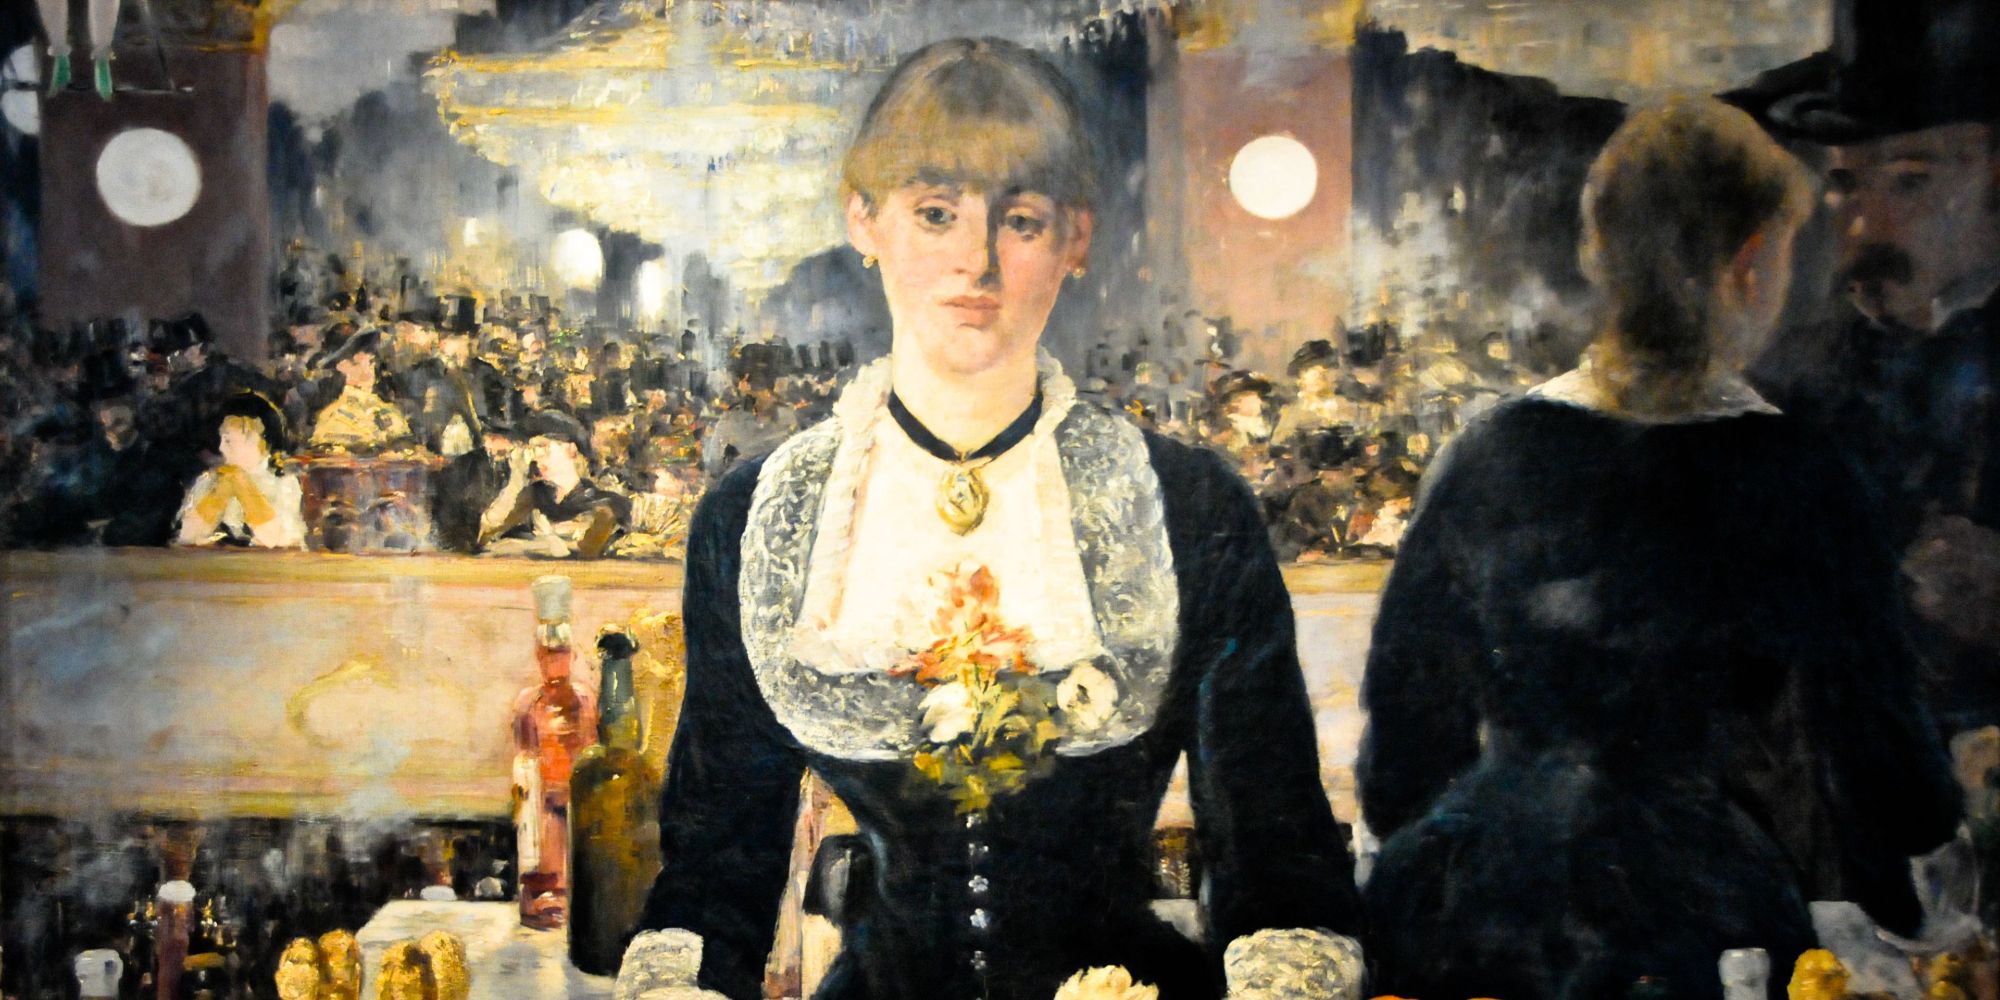 Édouard Manet's painting A Bar at the Folies-Bergère